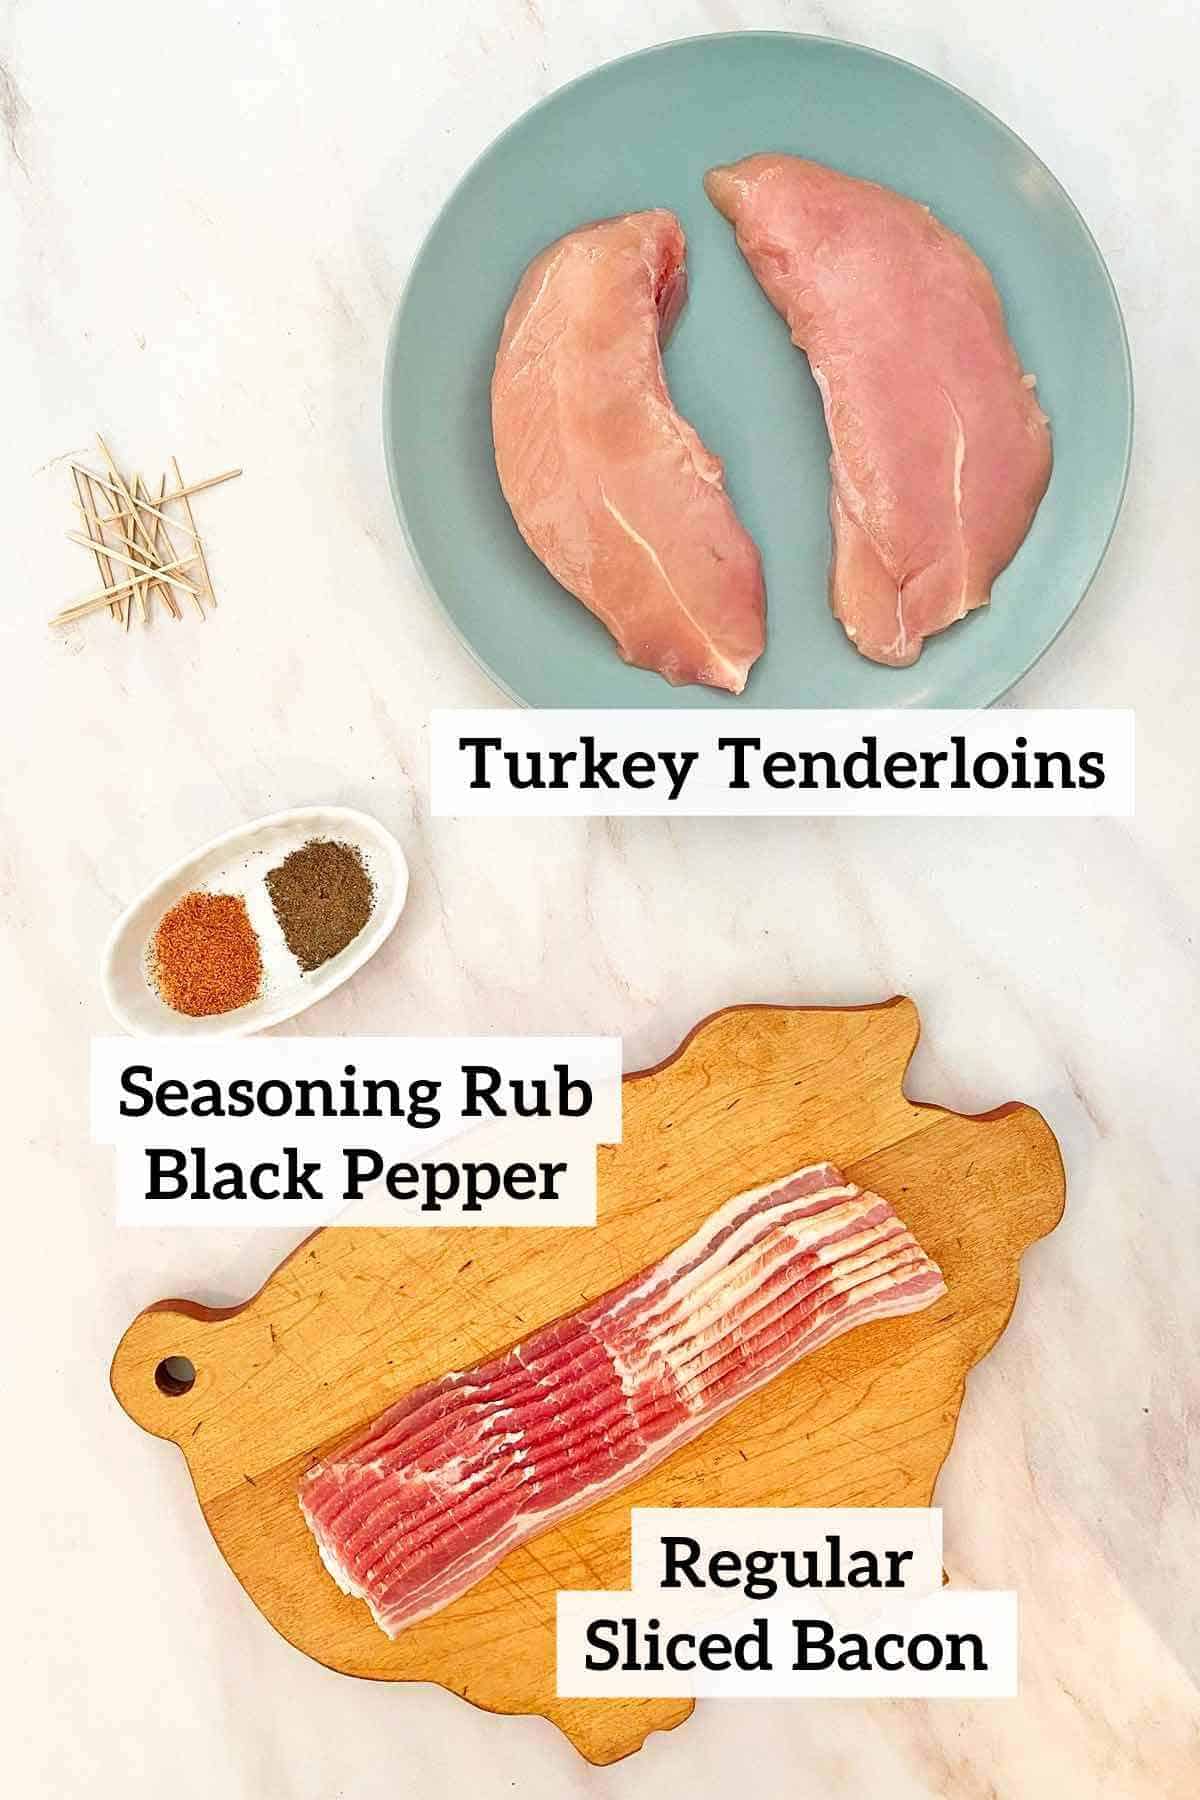 Turkey tenderloins, seasonings, bacon and a cutting board.